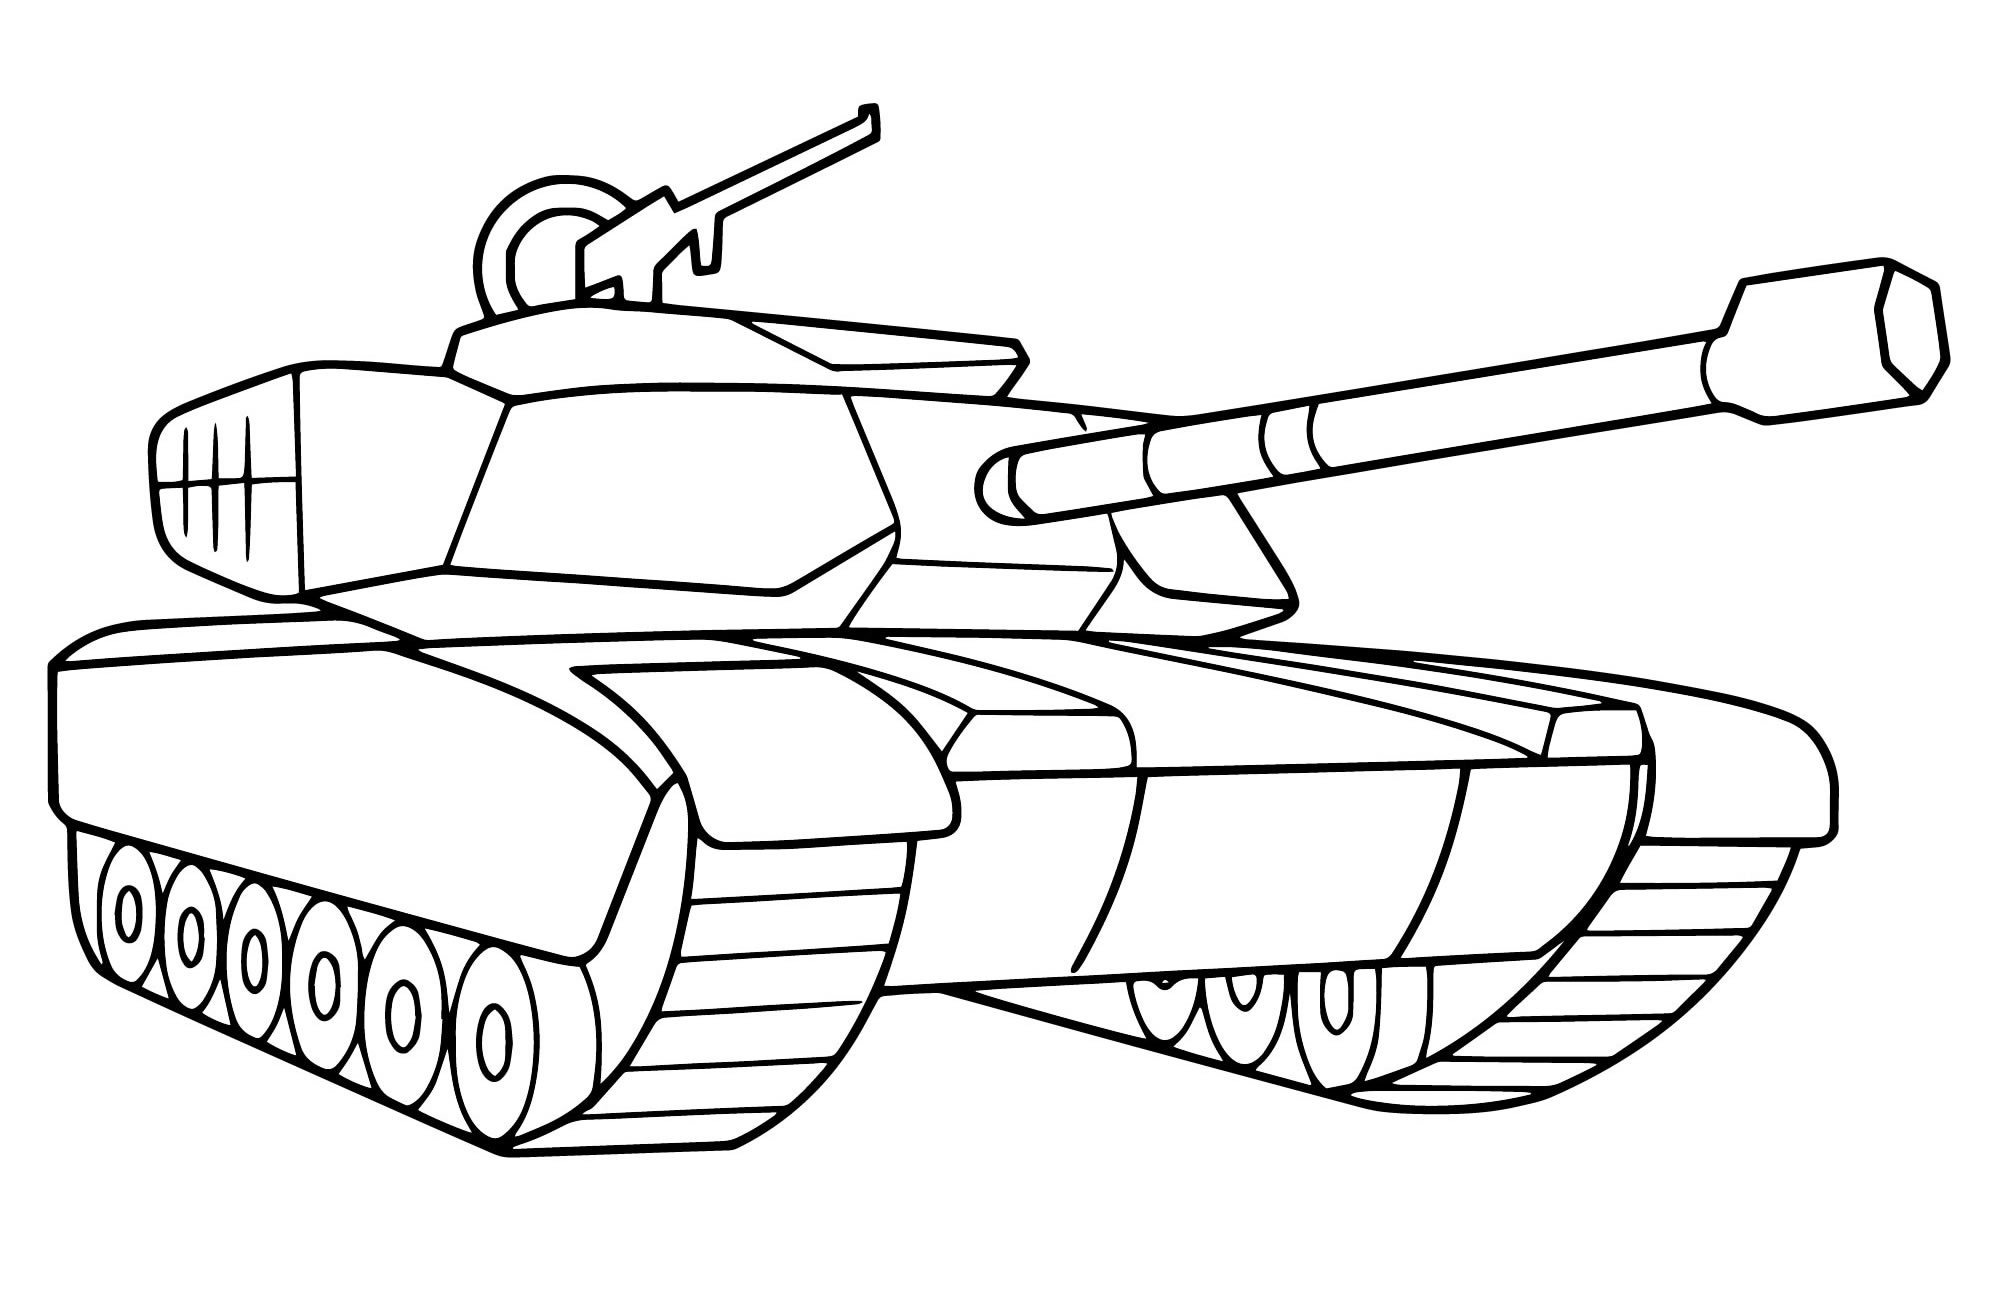 Раскраска 3 танка. Танк т-80 раскраска. Военный танк раскраска т34. Разукрашки для детей танк т 34. Раскраски танки т 90.